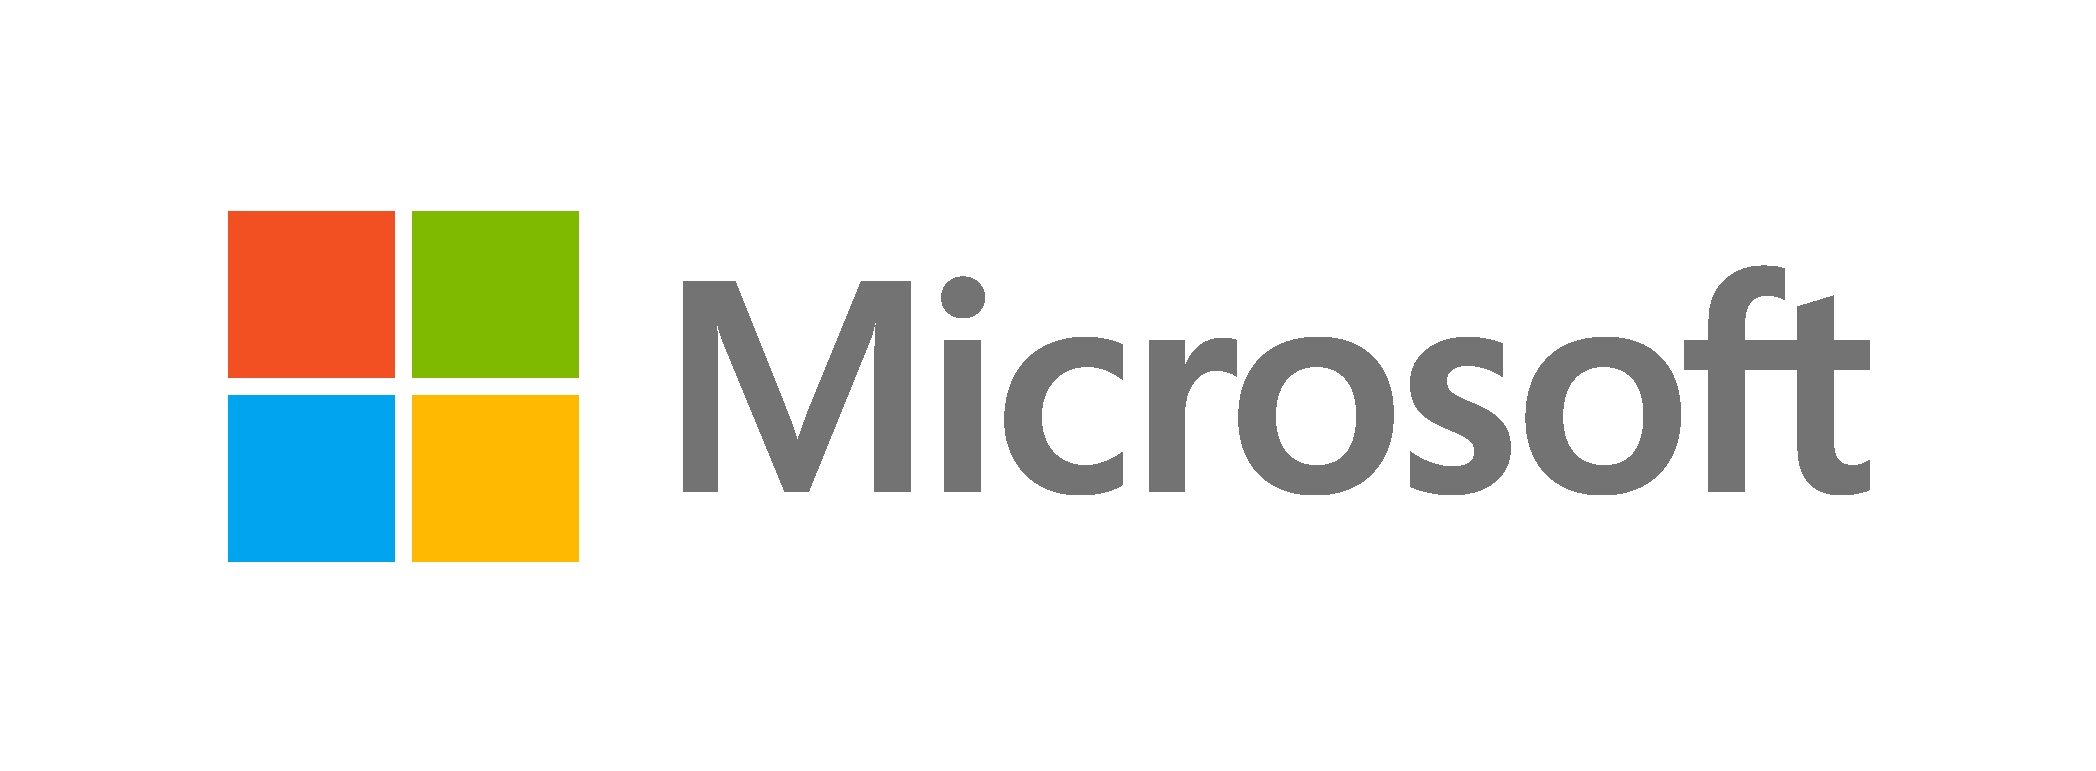 Microsoft Corporation logo